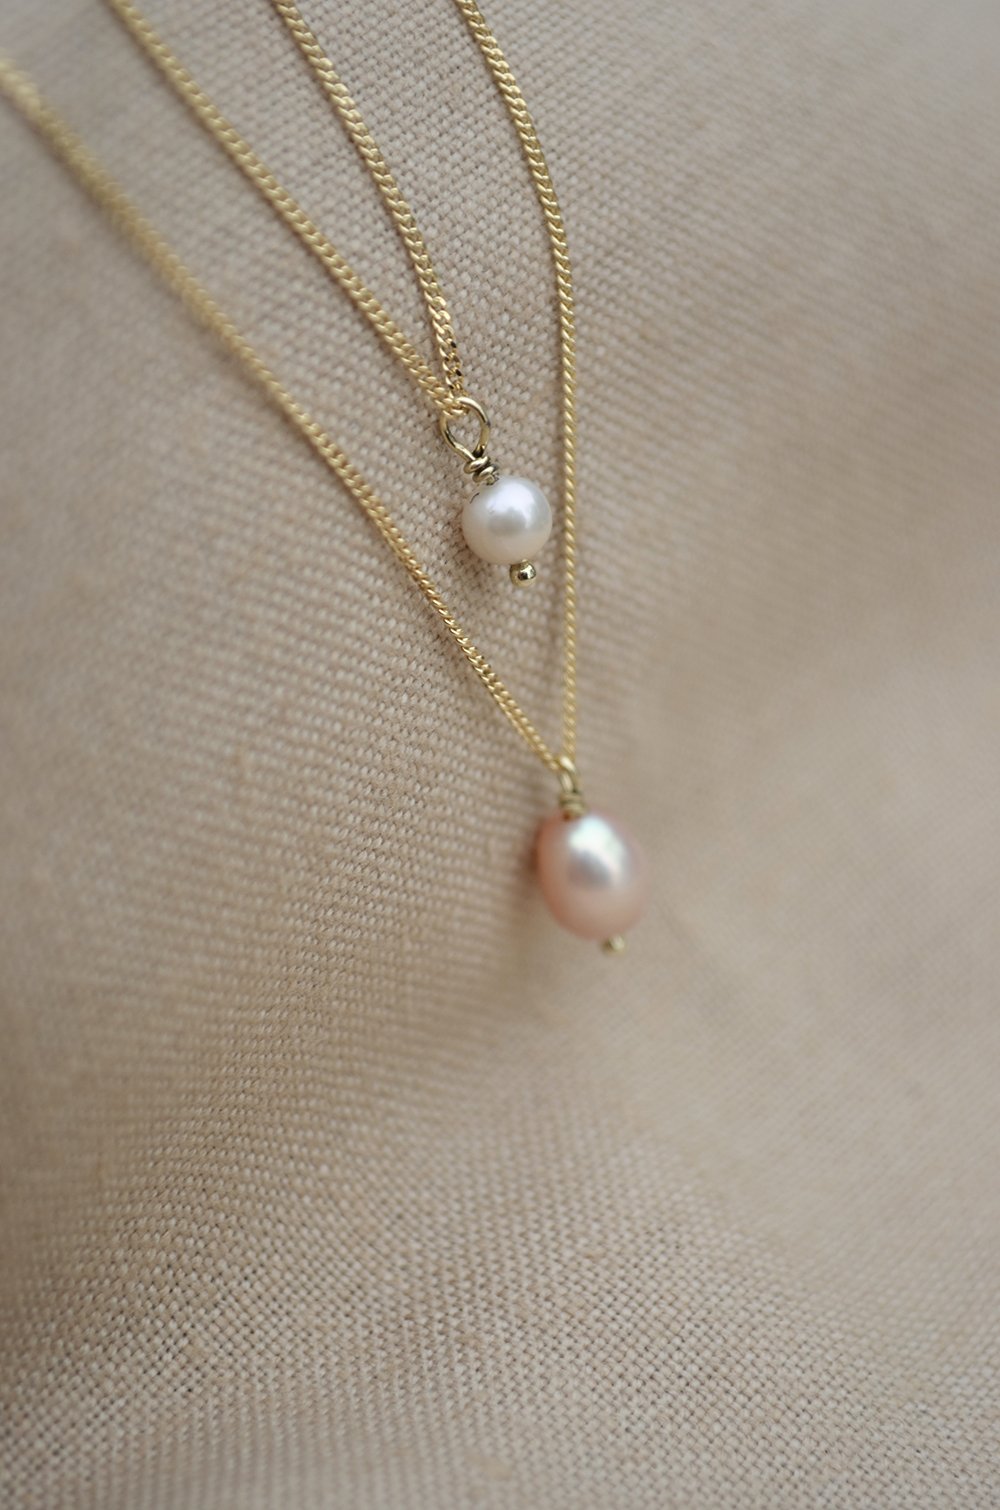 Buy Dainty Pearl Necklace, Minimalist Pearl Necklace, Small Gold Pearl  Necklace Online in India - Etsy